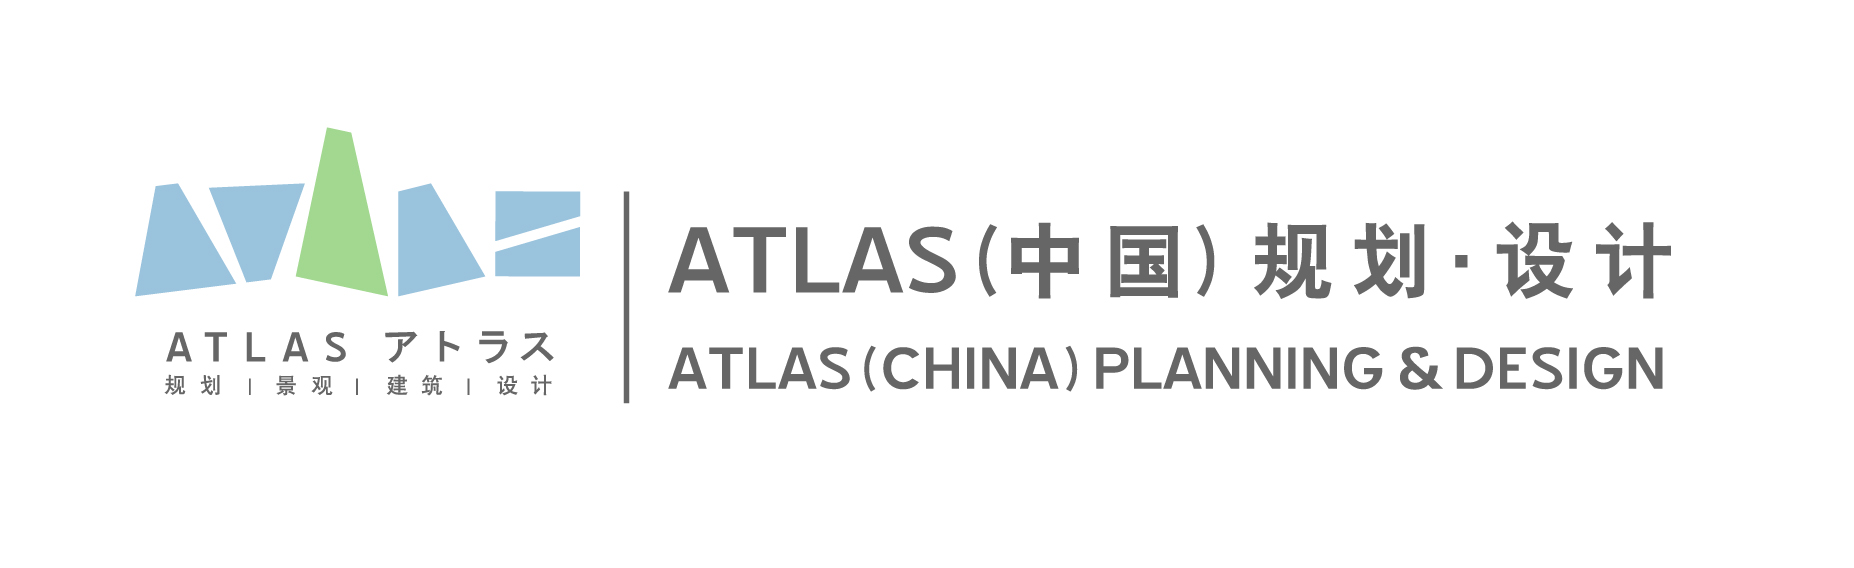 ATLAS標識